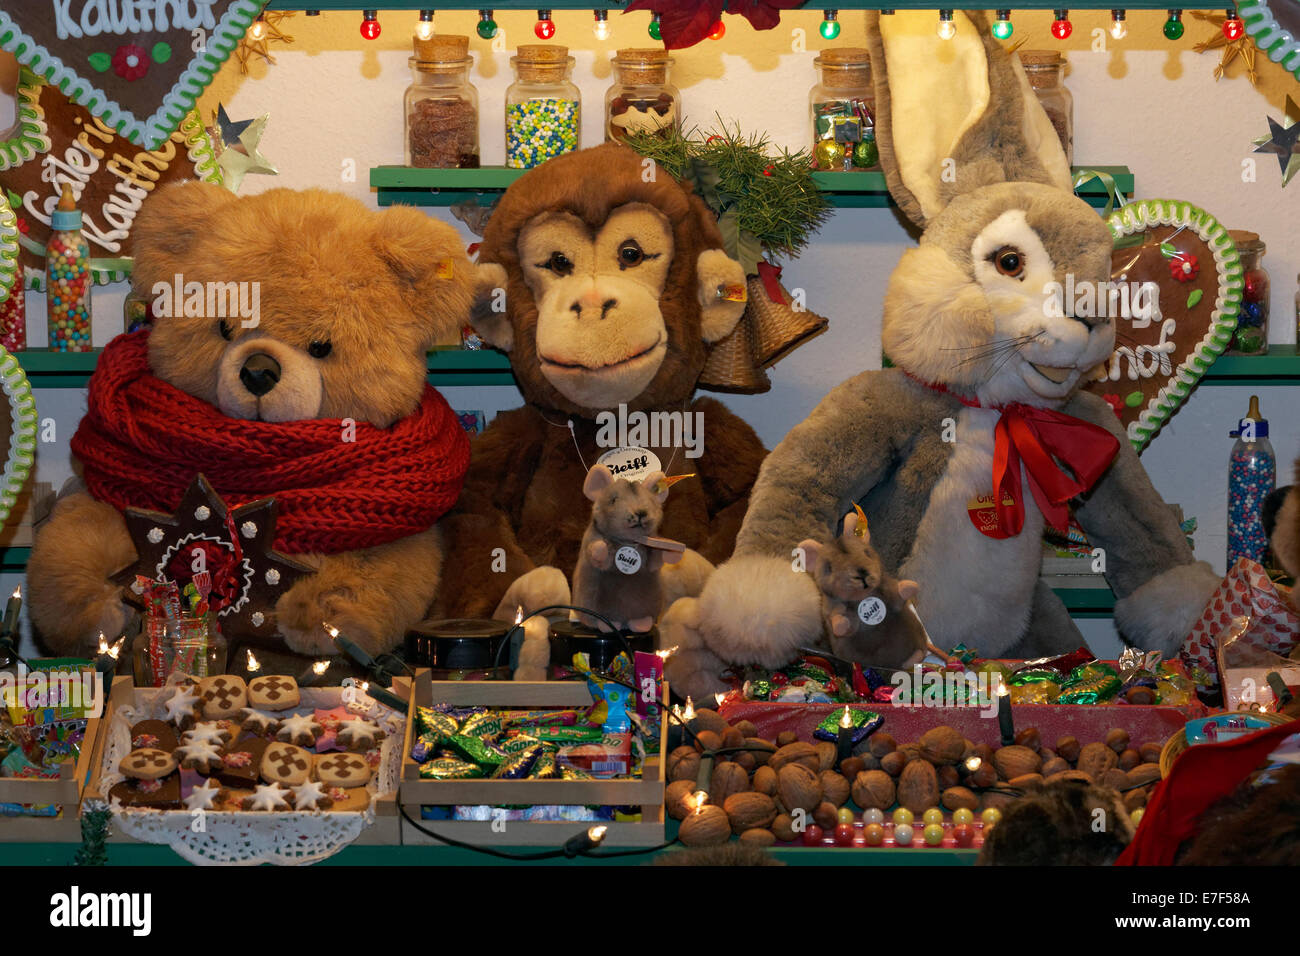 Market stall with Steiff stuffed animals, a bear, a monkey and a rabbit, Christmas market, Düsseldorf, North Rhine-Westphalia Stock Photo